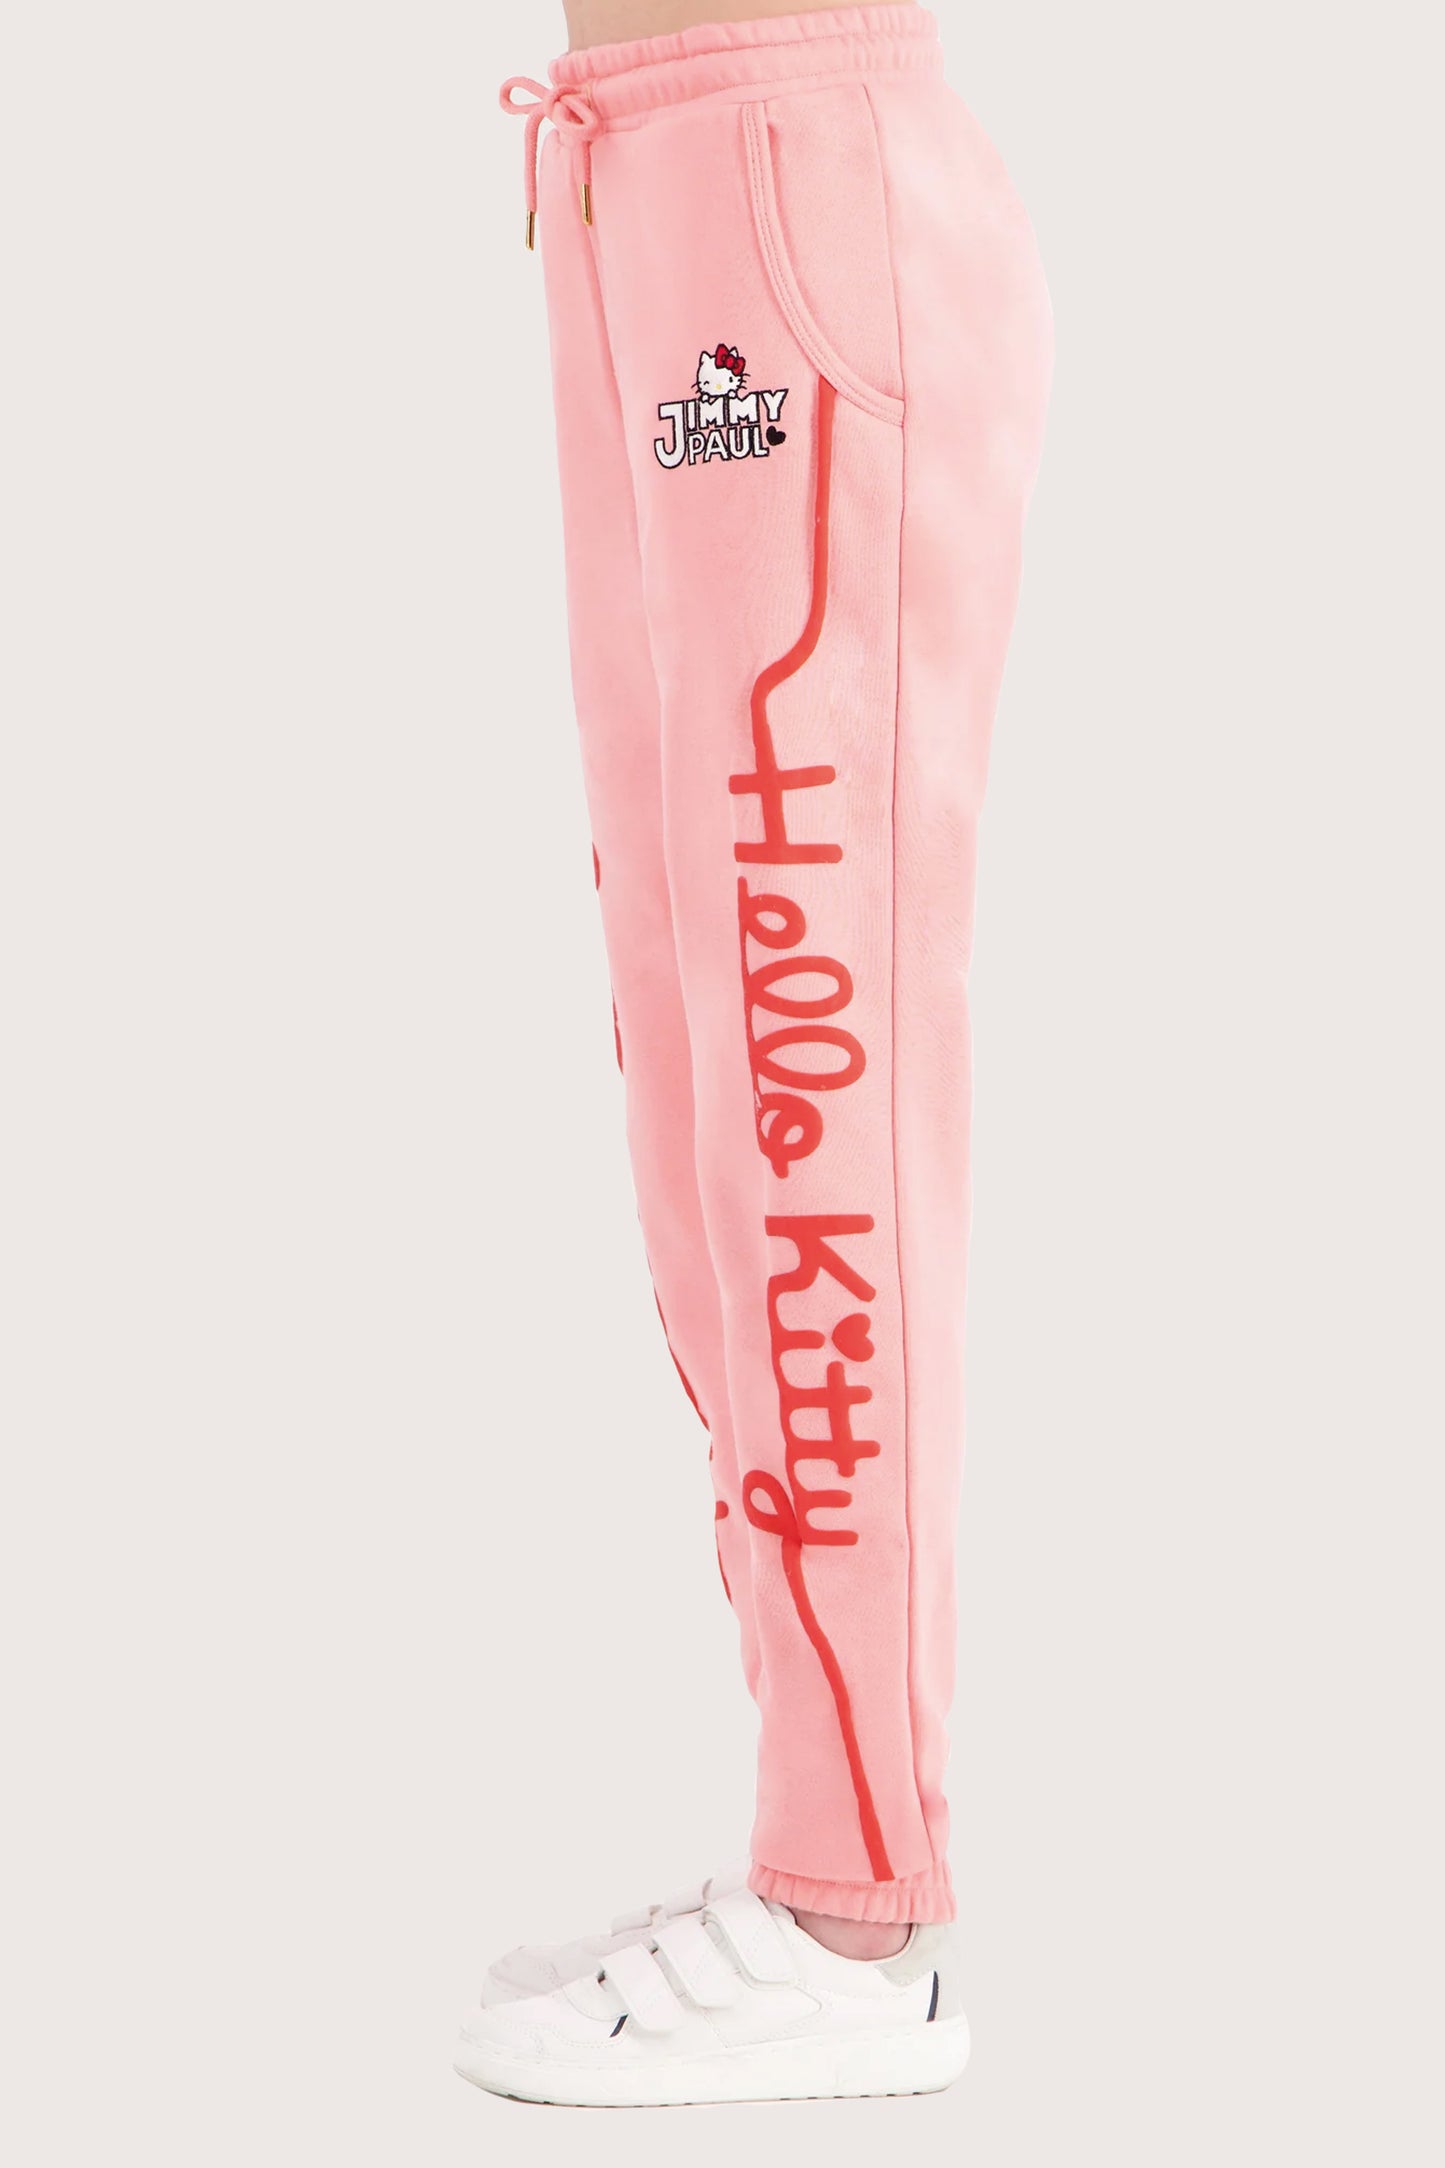 JimmyPaul x Hello Kitty - Pink Ladies Jogger